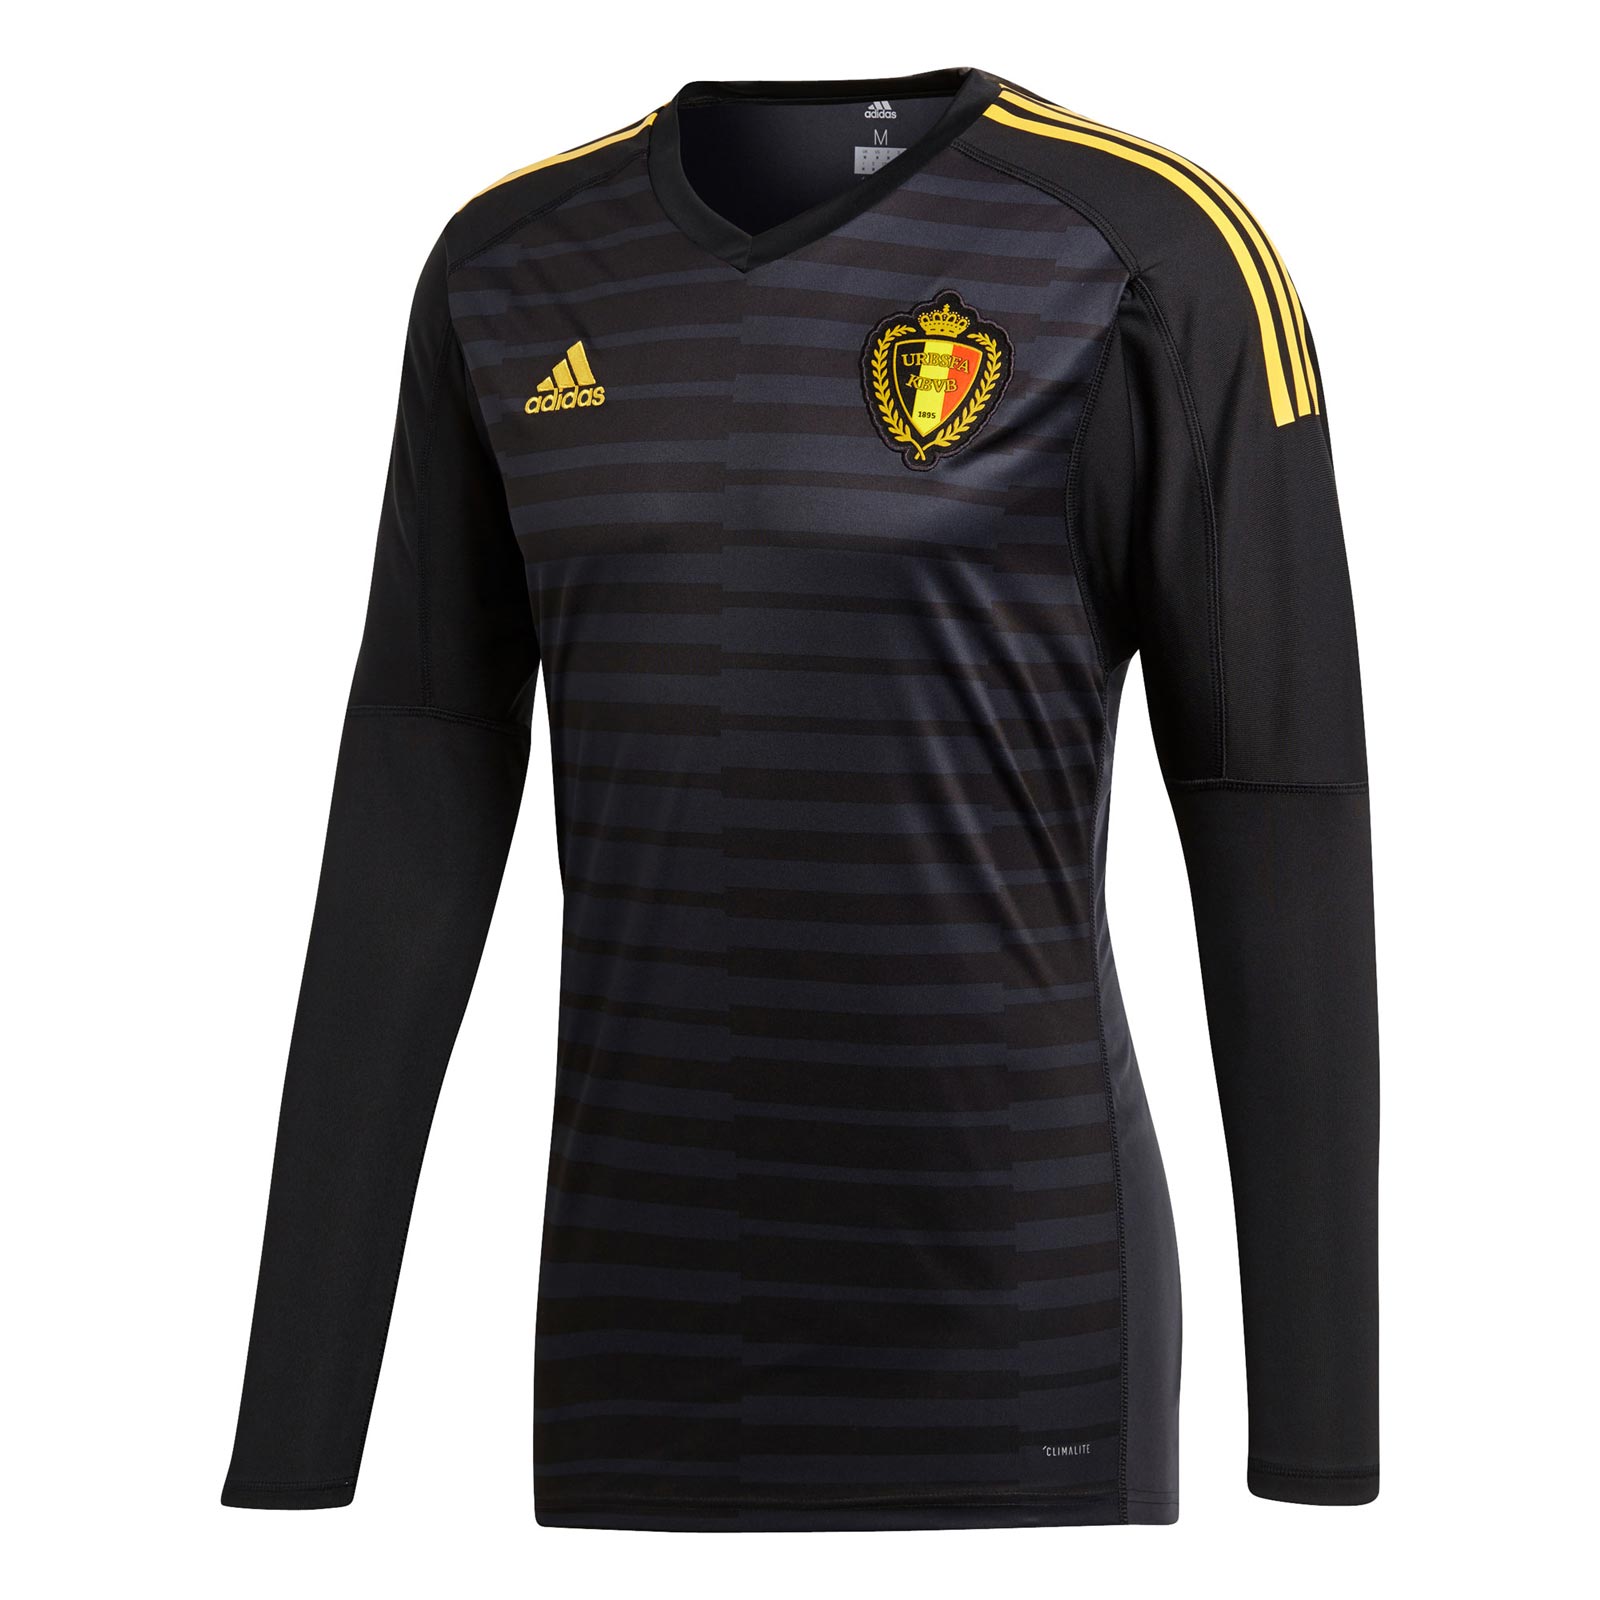 belgium soccer jersey 2018